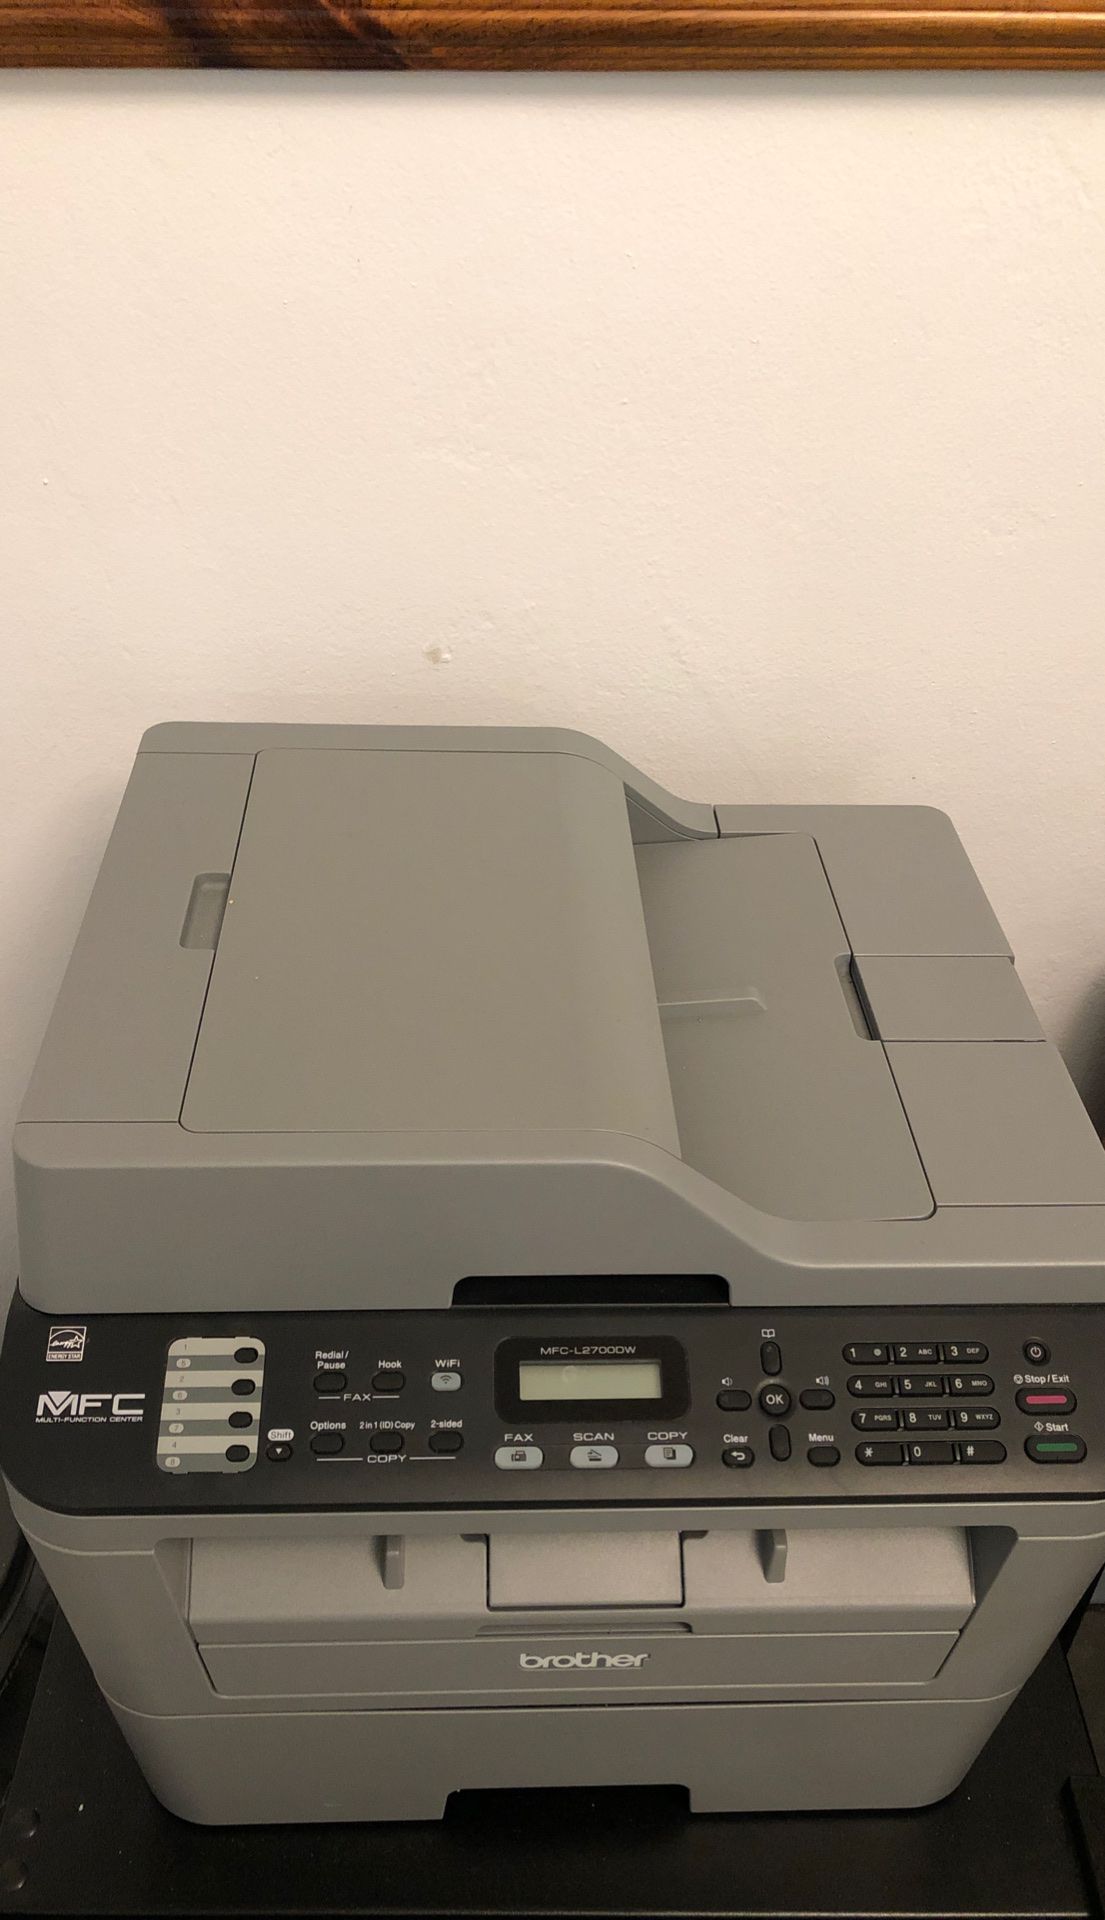 PRINTER Brother scanner/printer/fax